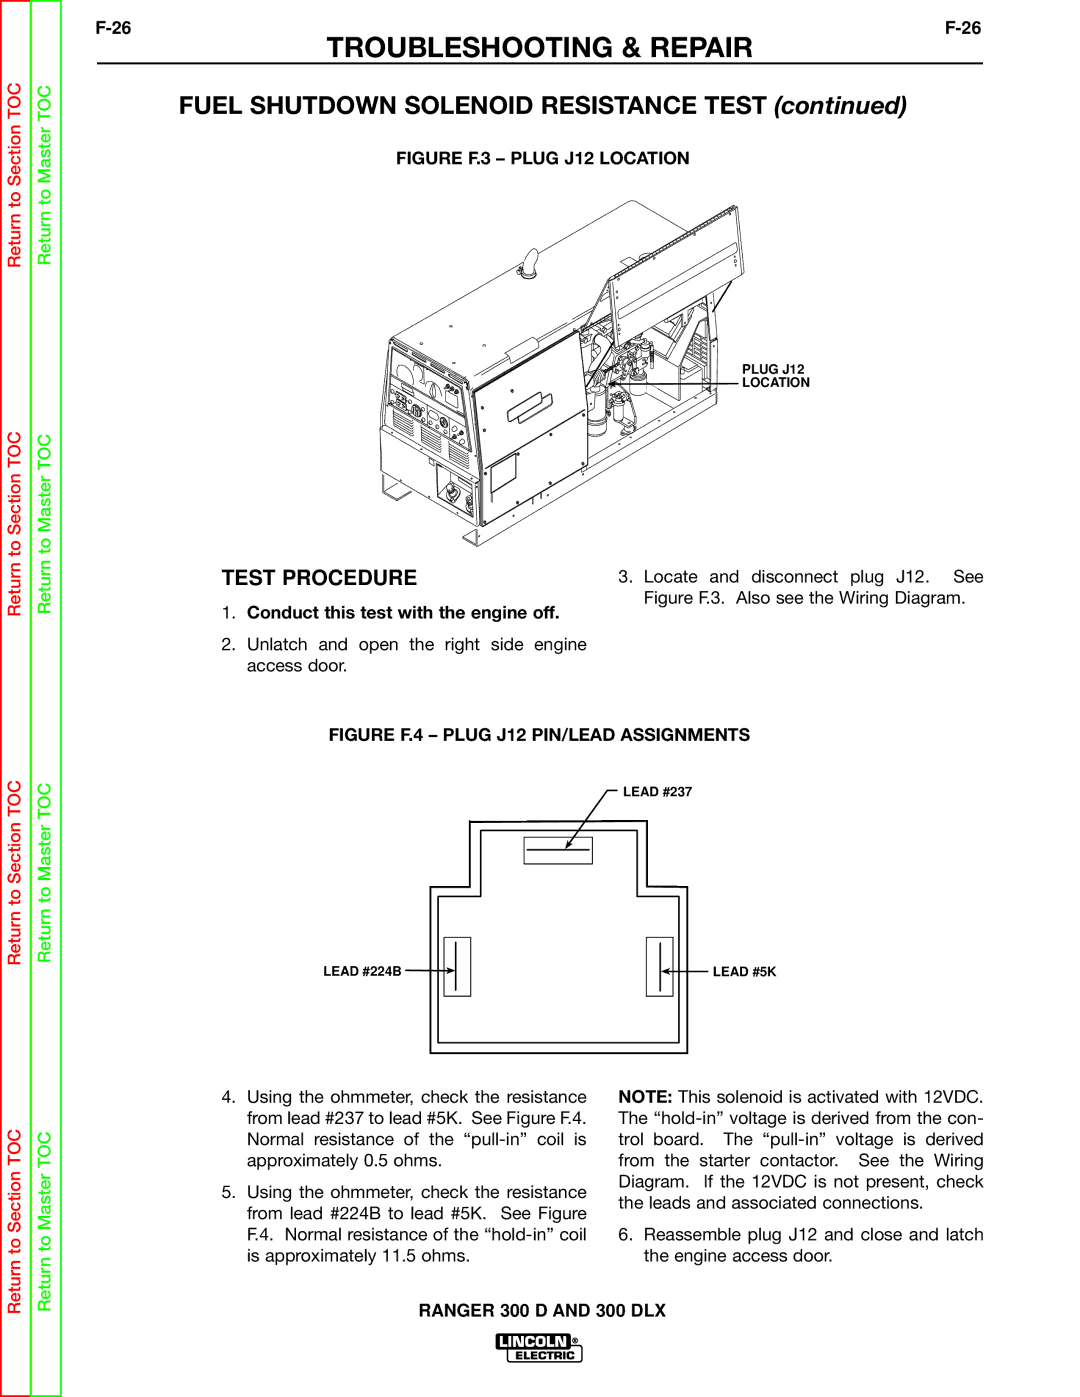 Lincoln Electric SVM148-B service manual Fuel Shutdown Solenoid Resistance Test, Figure F.3 Plug J12 Location 